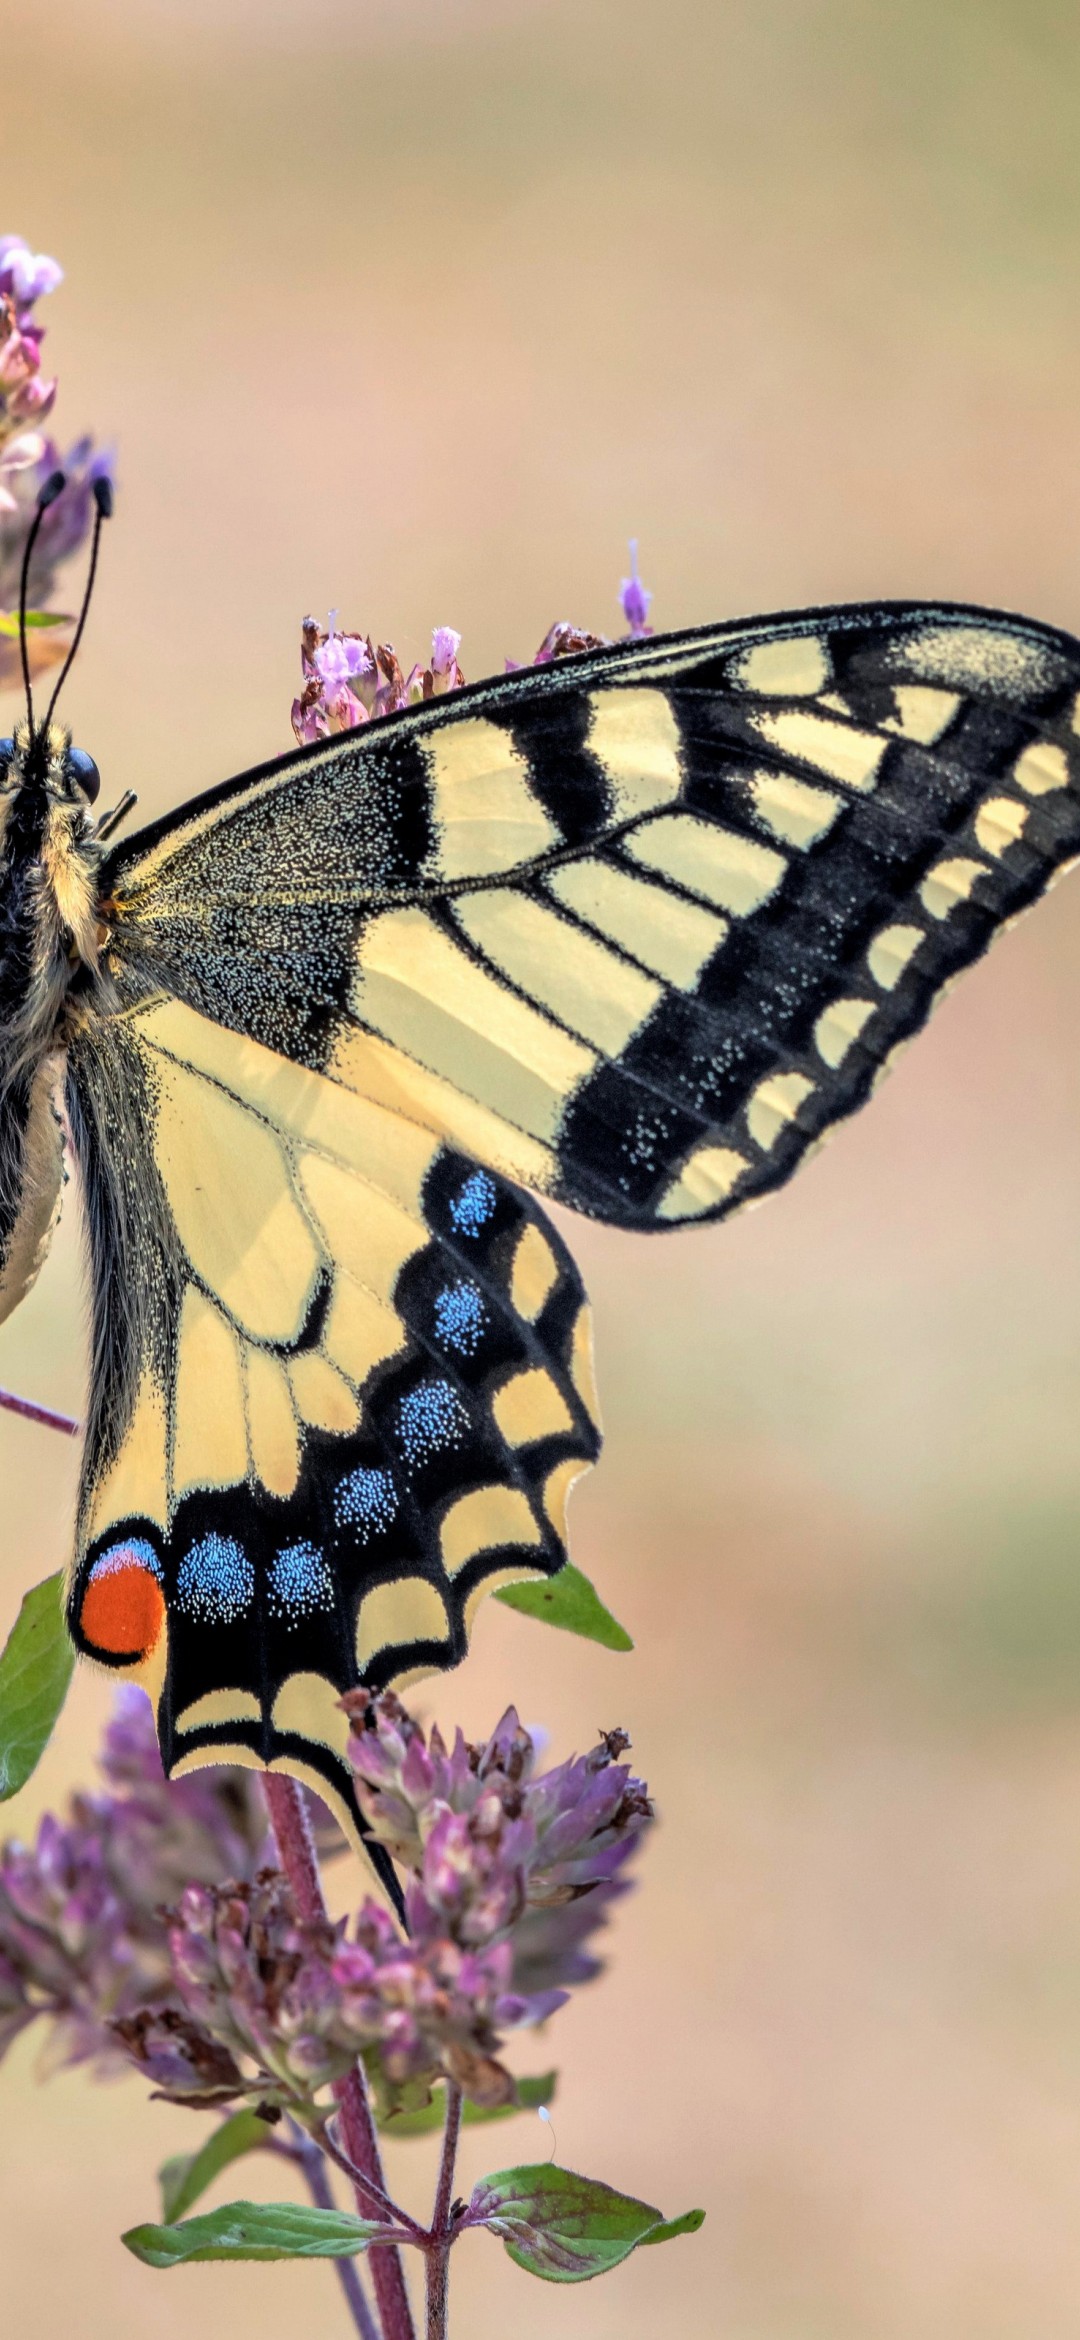 Download Butterfly Flower Pollen Macro Wallpaper At 1080x2340 Resolution